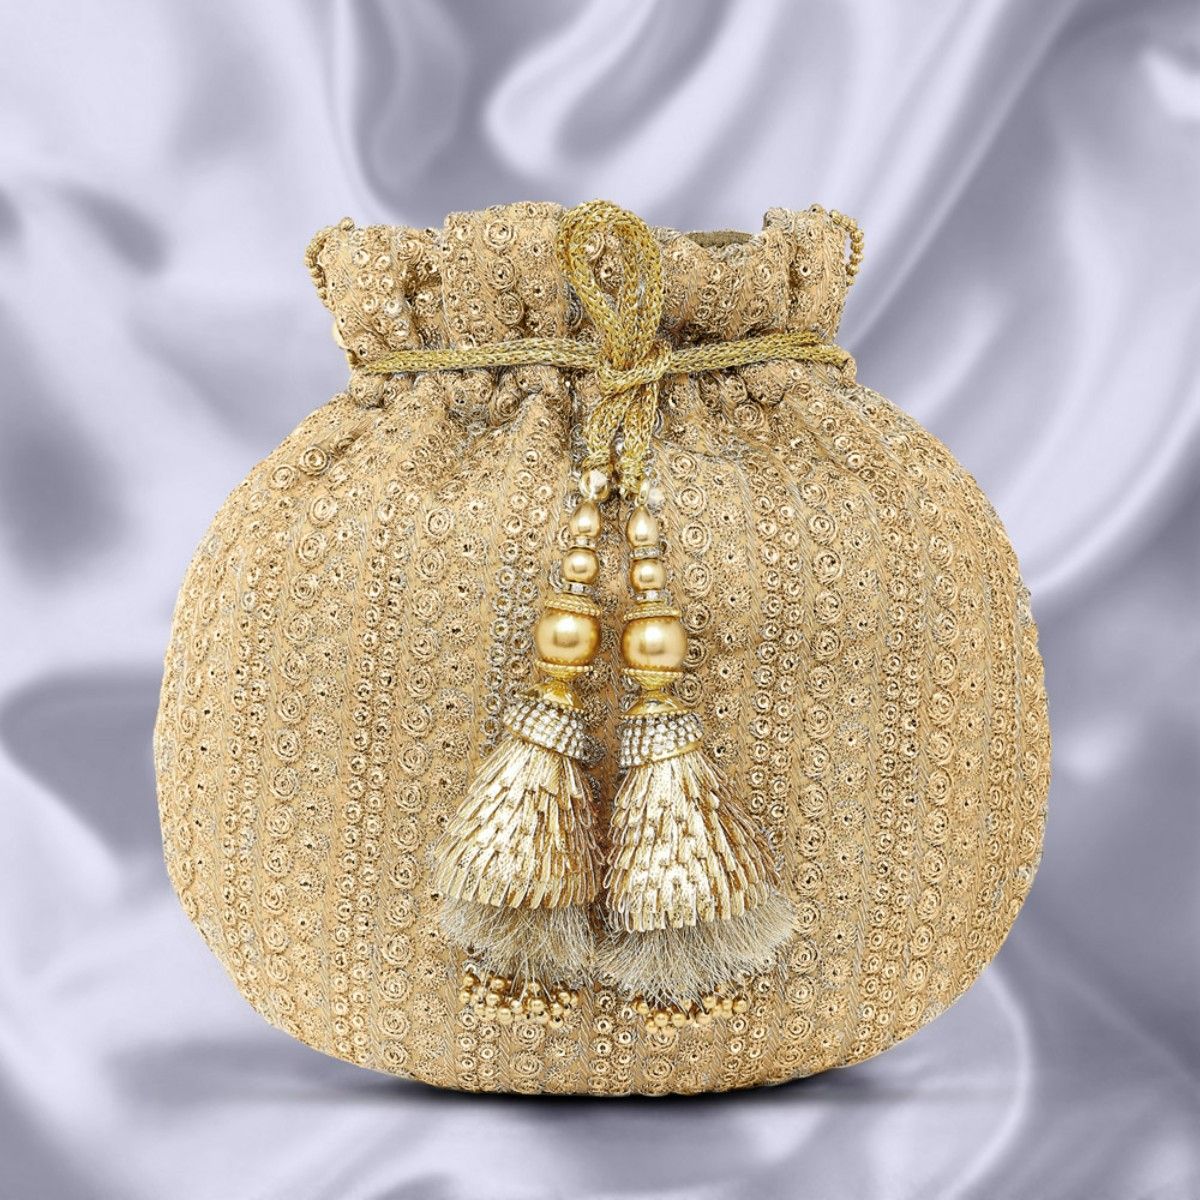 myDsGifts Womens Designer Ethnic Potli Bag with Beadwork Satin Fabric  available on Amazon Single BagGolden  Amazonin Fashion